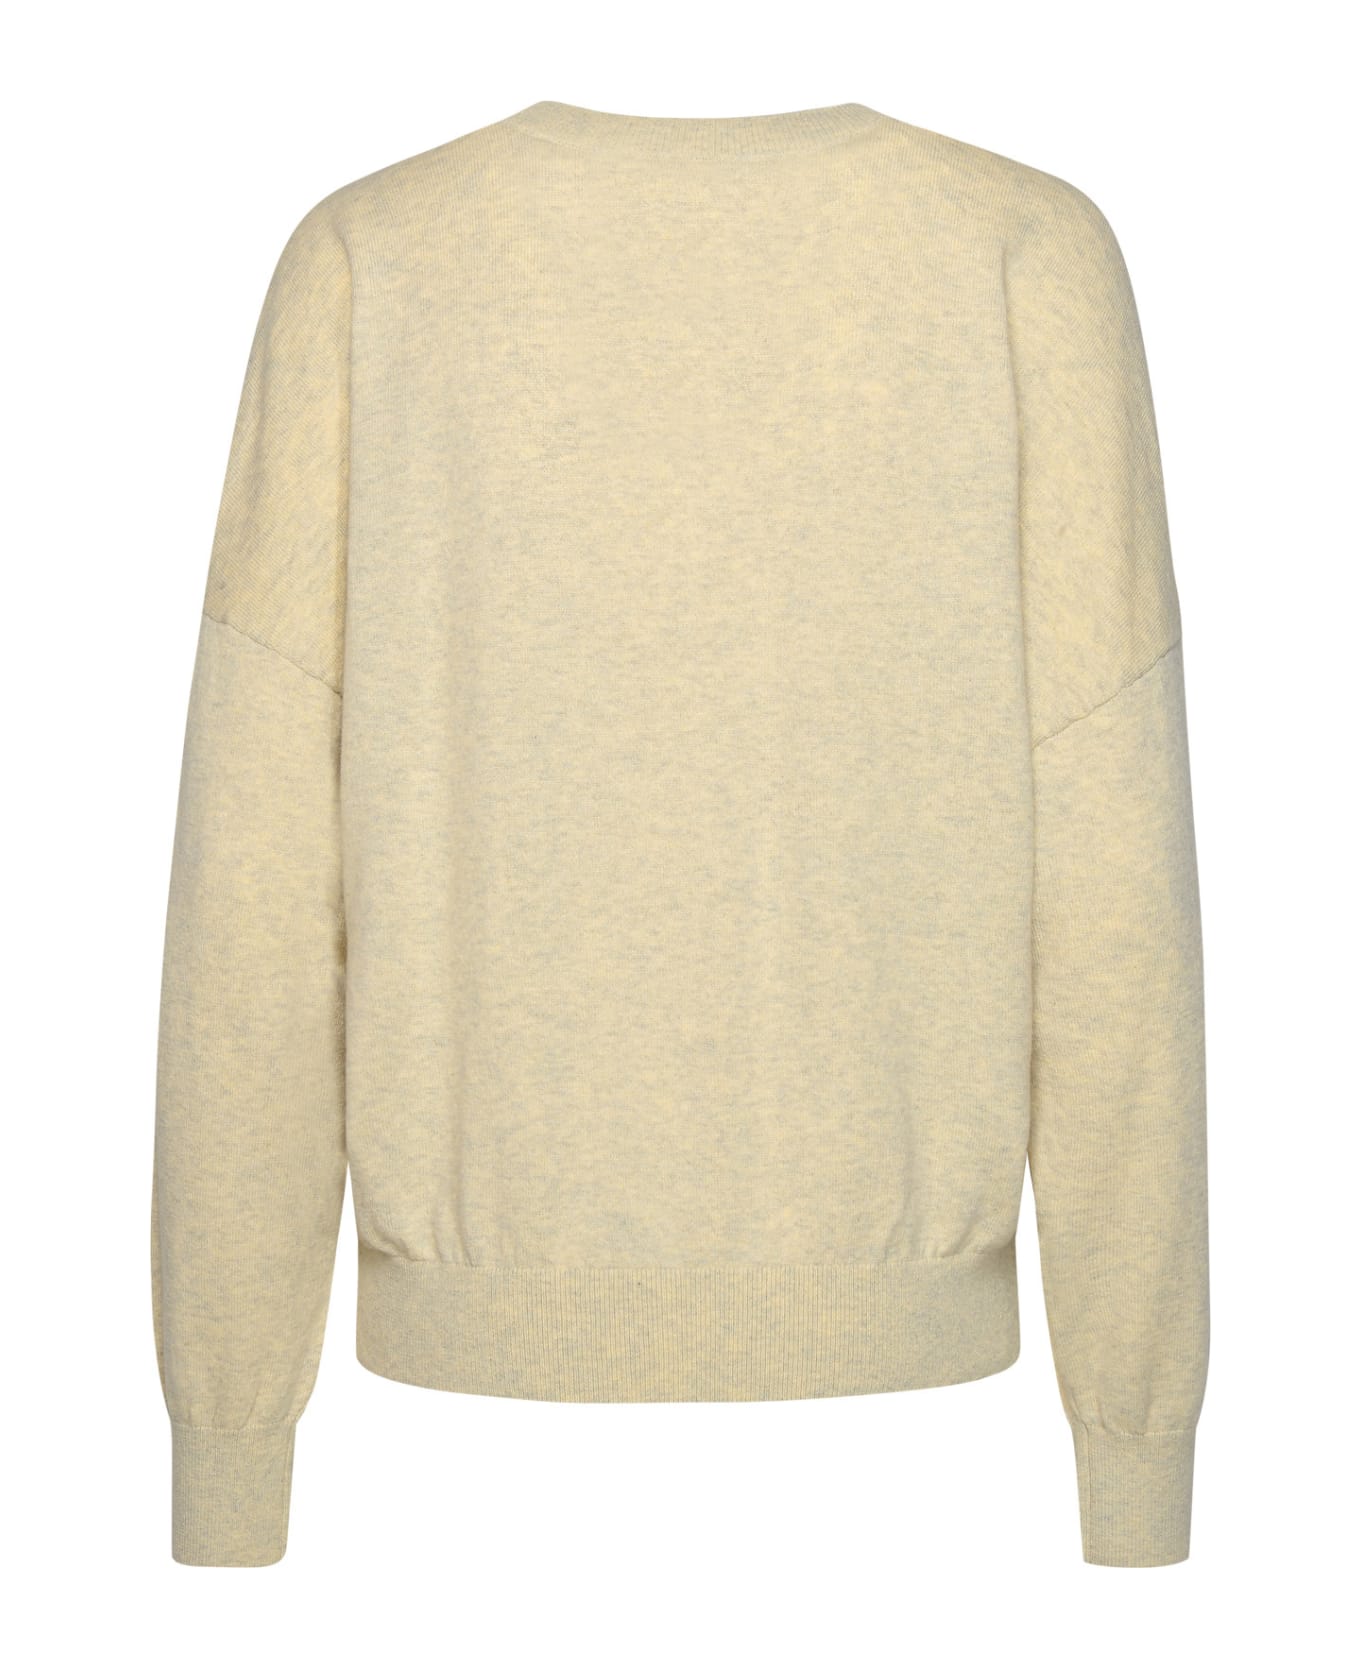 Marant Étoile 'marisans' Grey Wool Blend Sweater - LIGHT GREY / SILVER